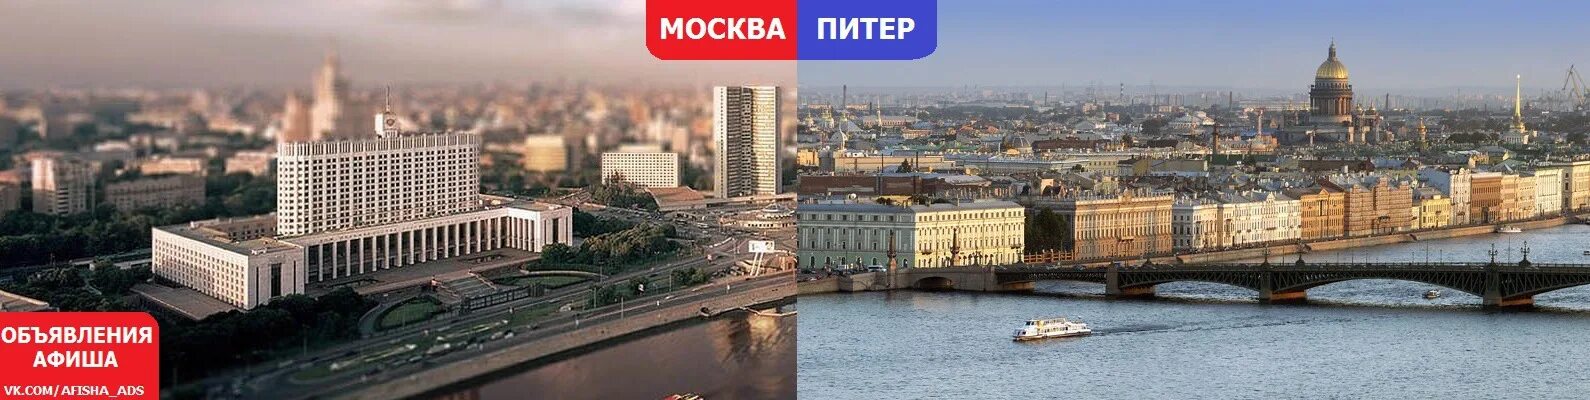 МСК СПБ. Москва или Питер. Москва vs Санкт-Петербург. Питер то Москва.